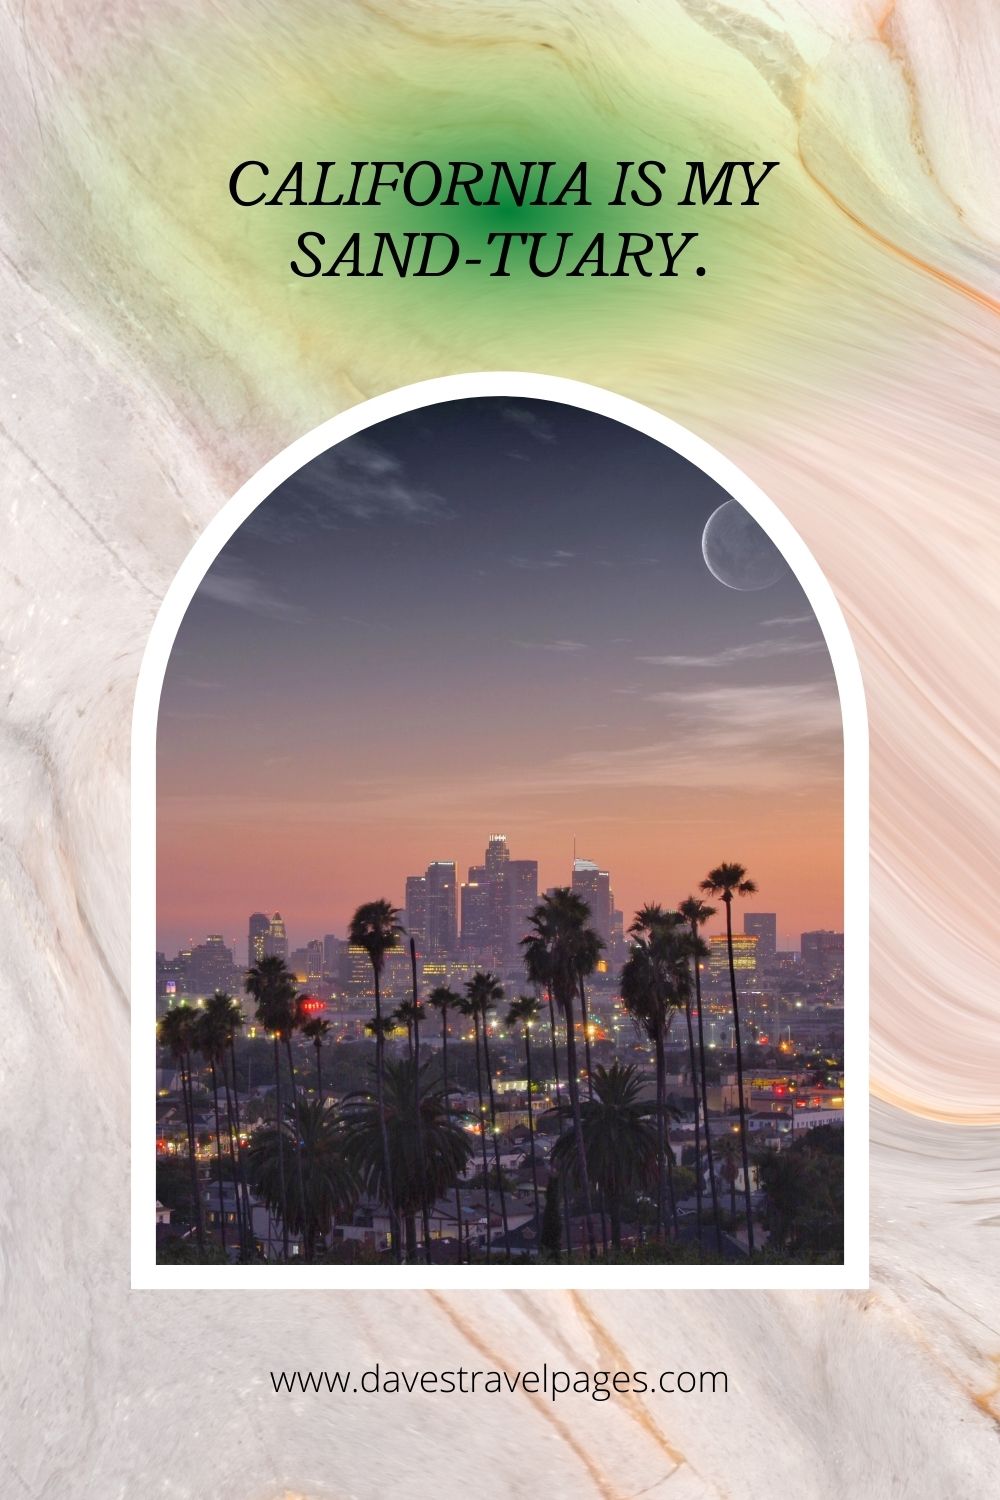 California is my Sand-tuary.